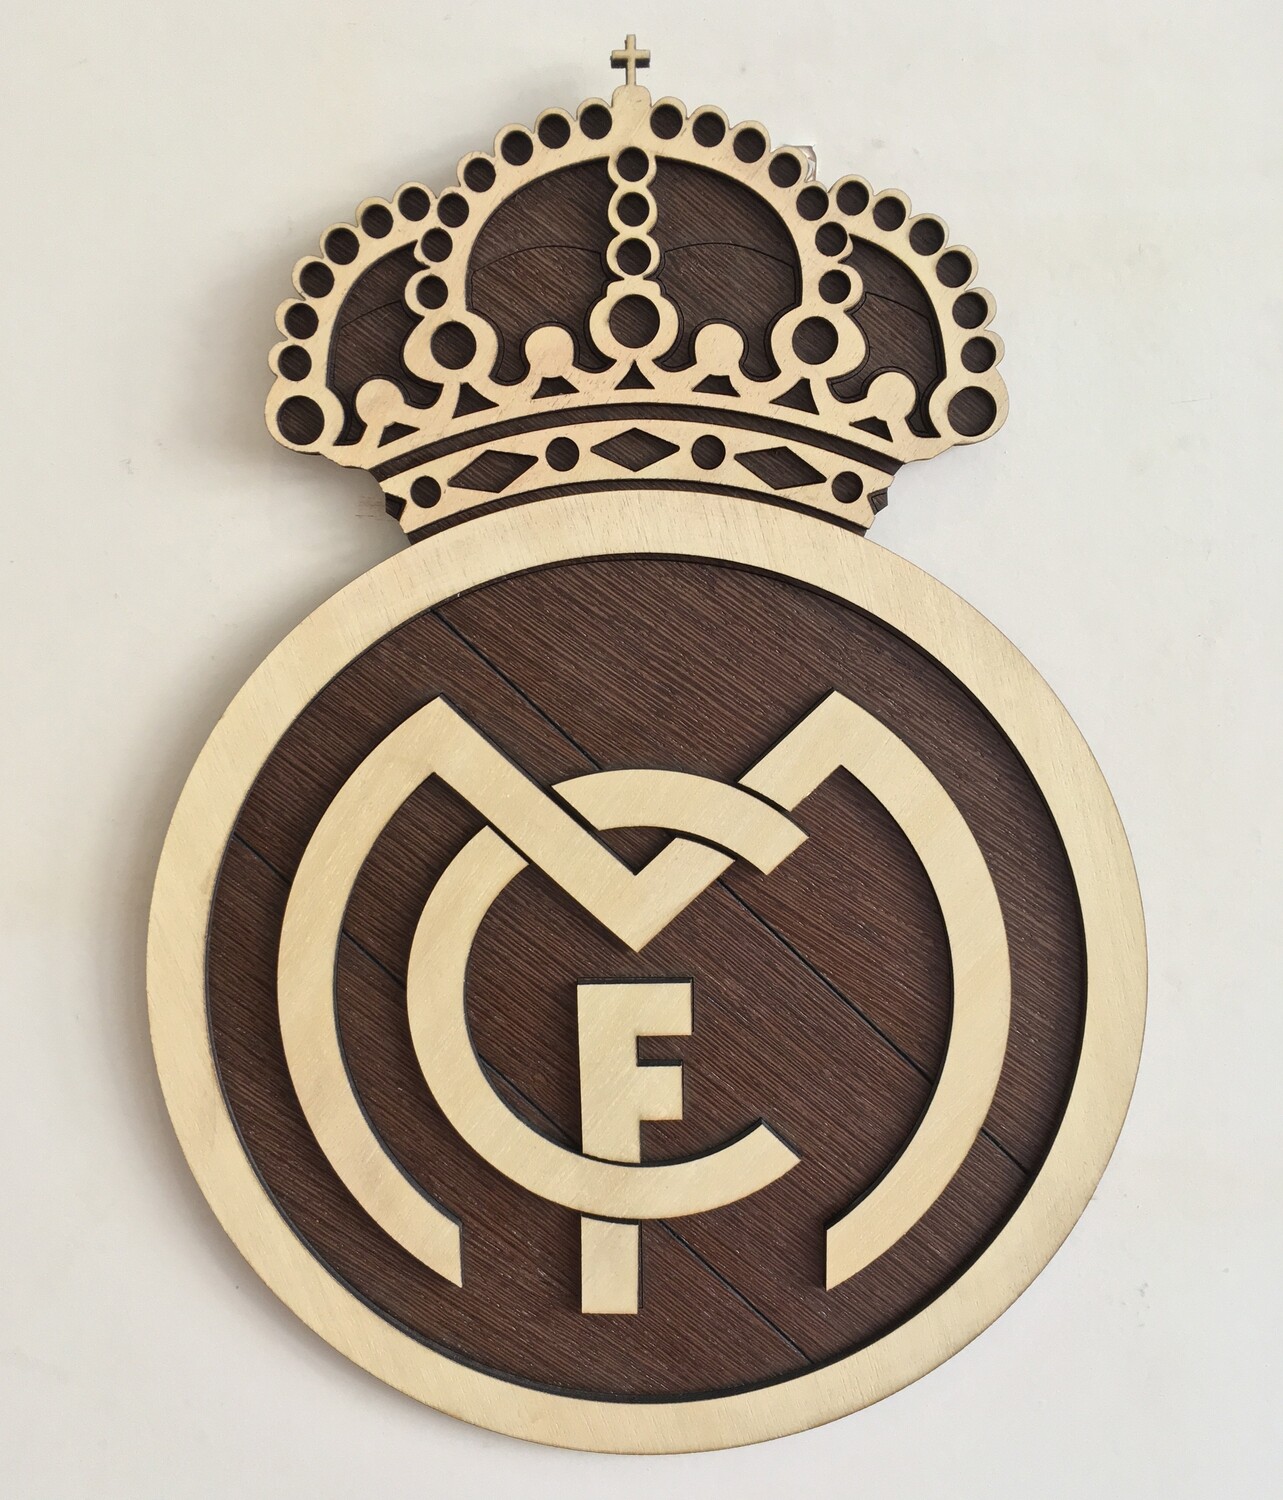 REAL MADRID F.C. - Wall Hang Football Crest